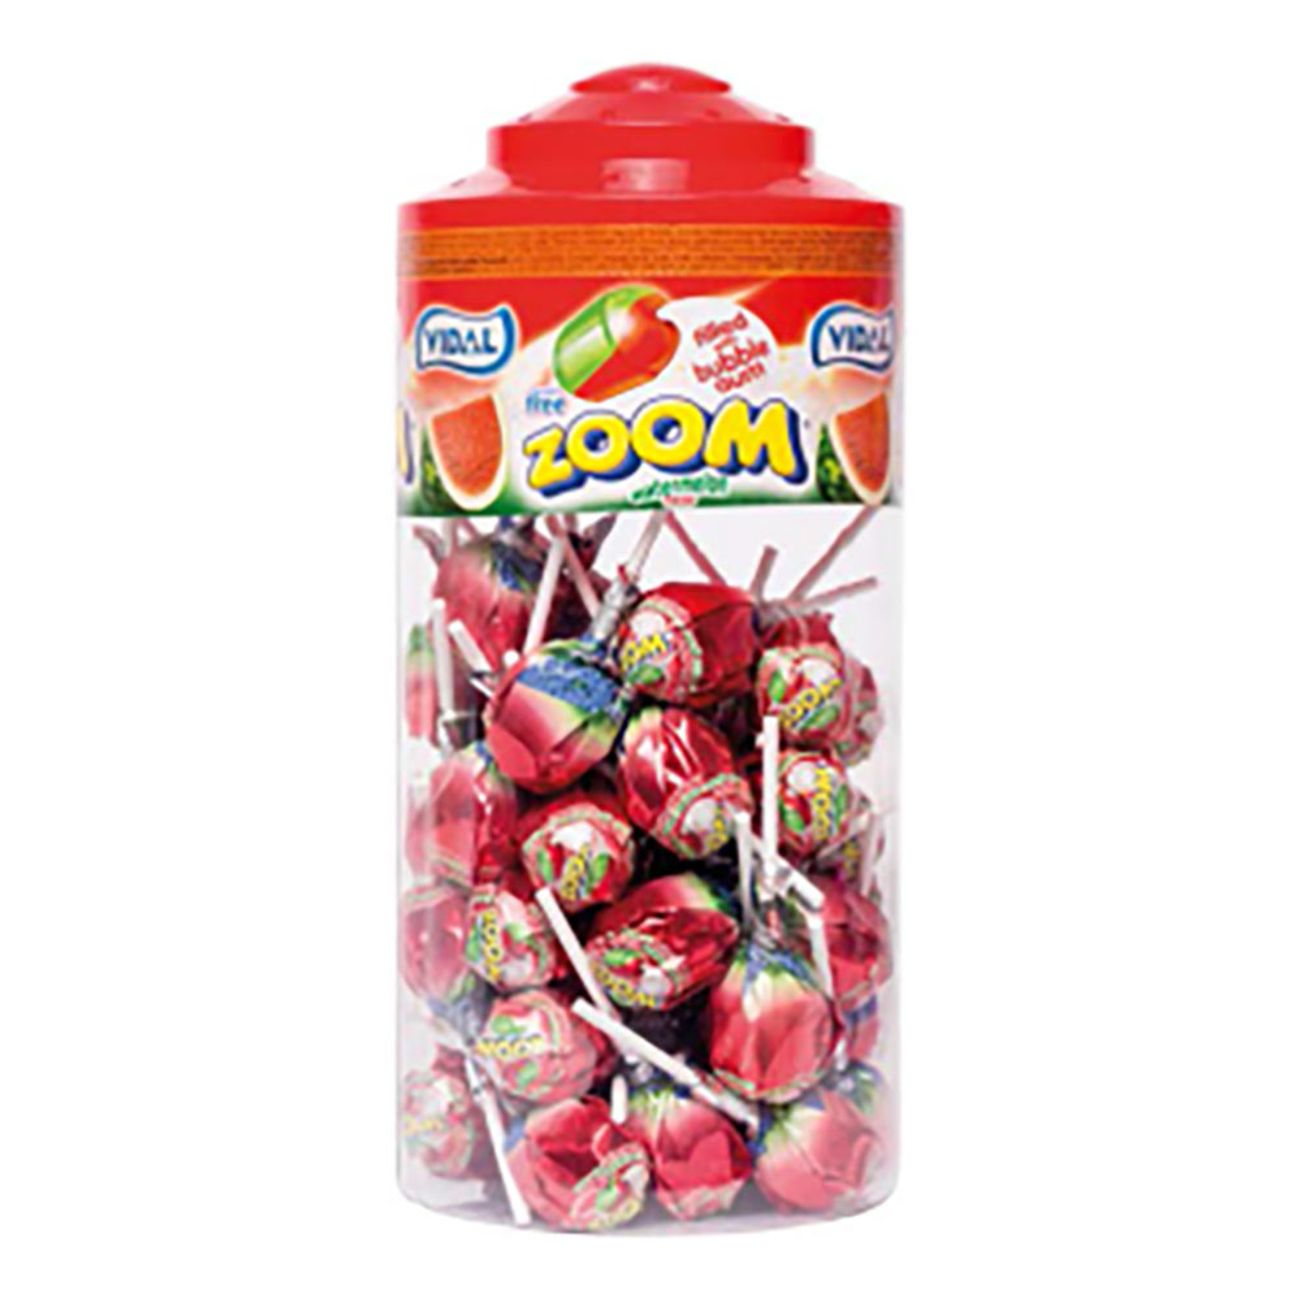 zoom-mega-melon-klubba-storpack-78582-1